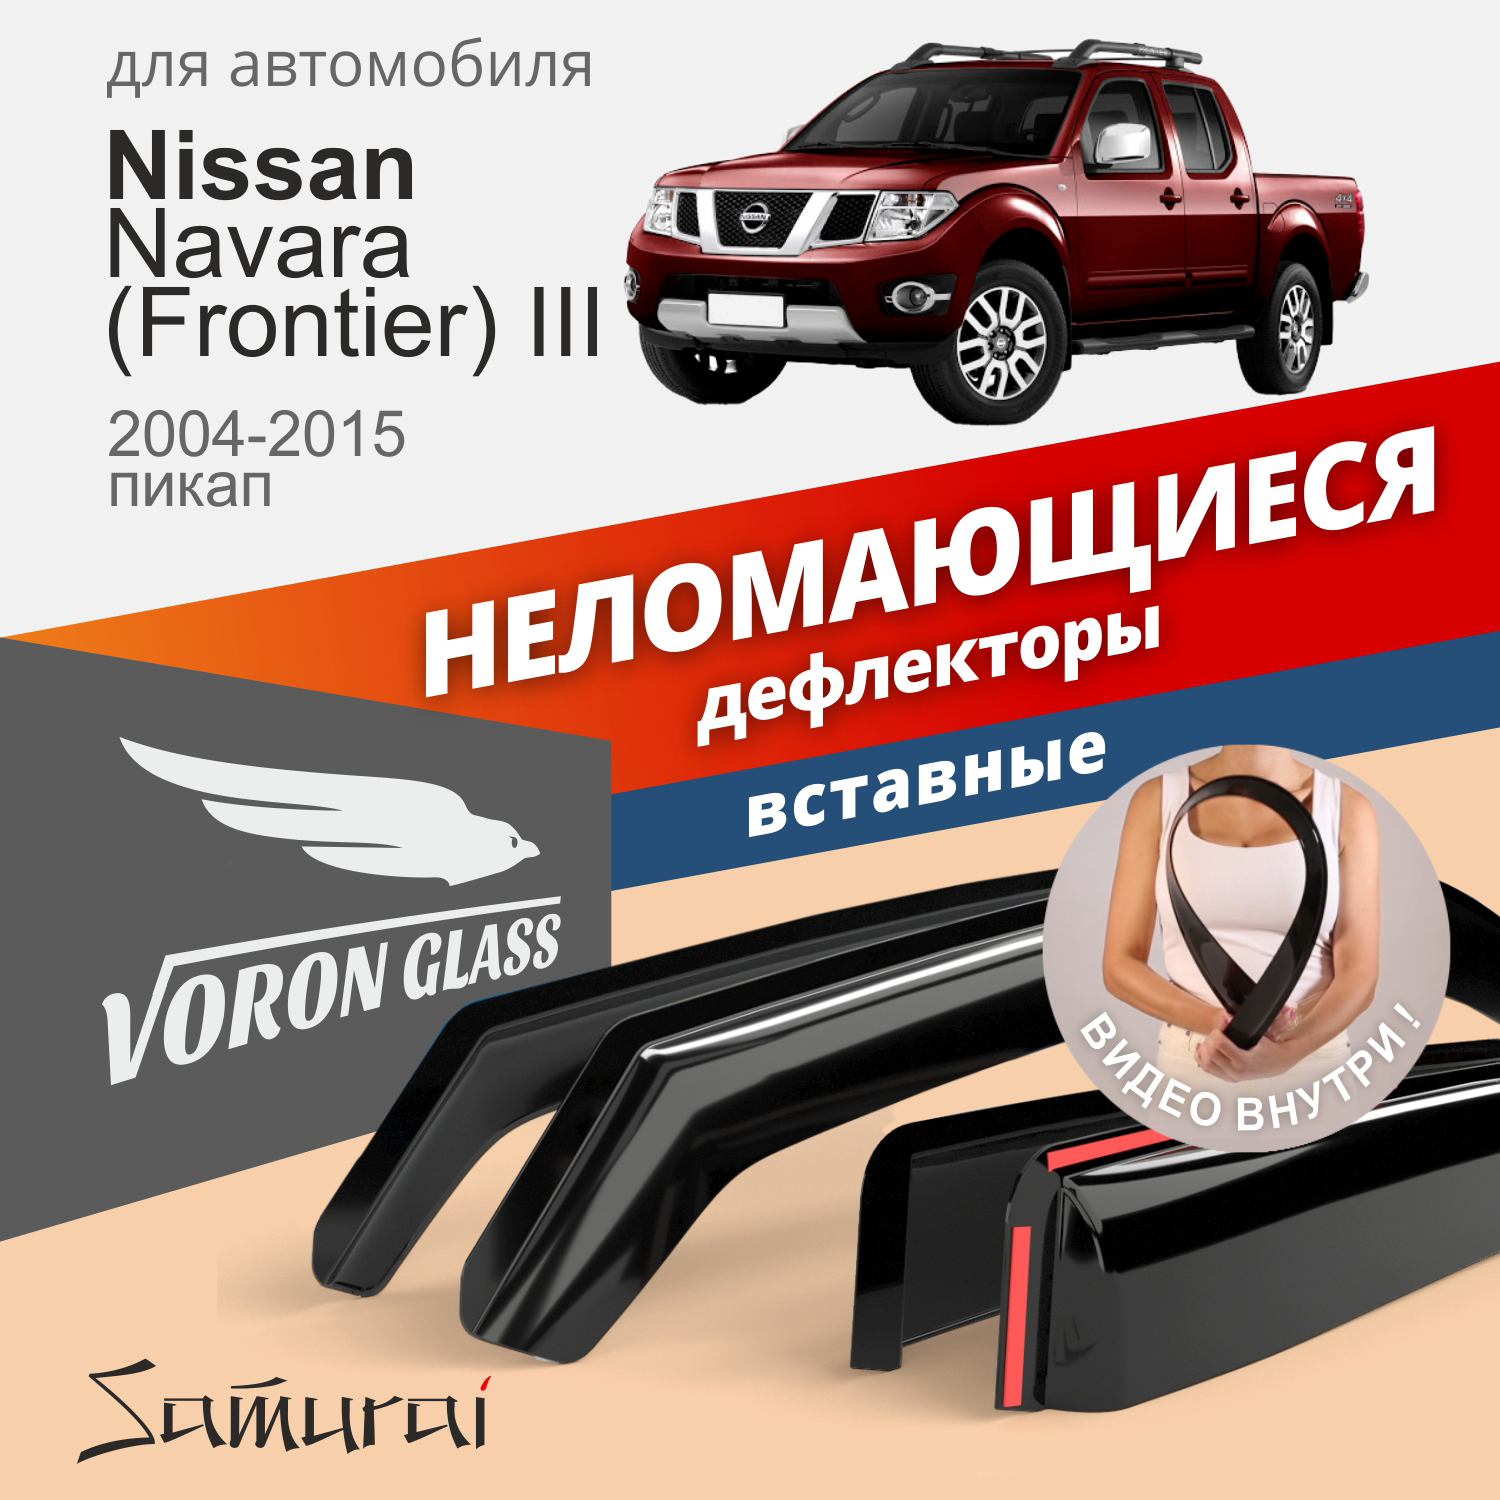 Дефлекторы Voron Glass Samurai для Nissan Navara (Frontier) III 2004-2015 /пикап/вставные/